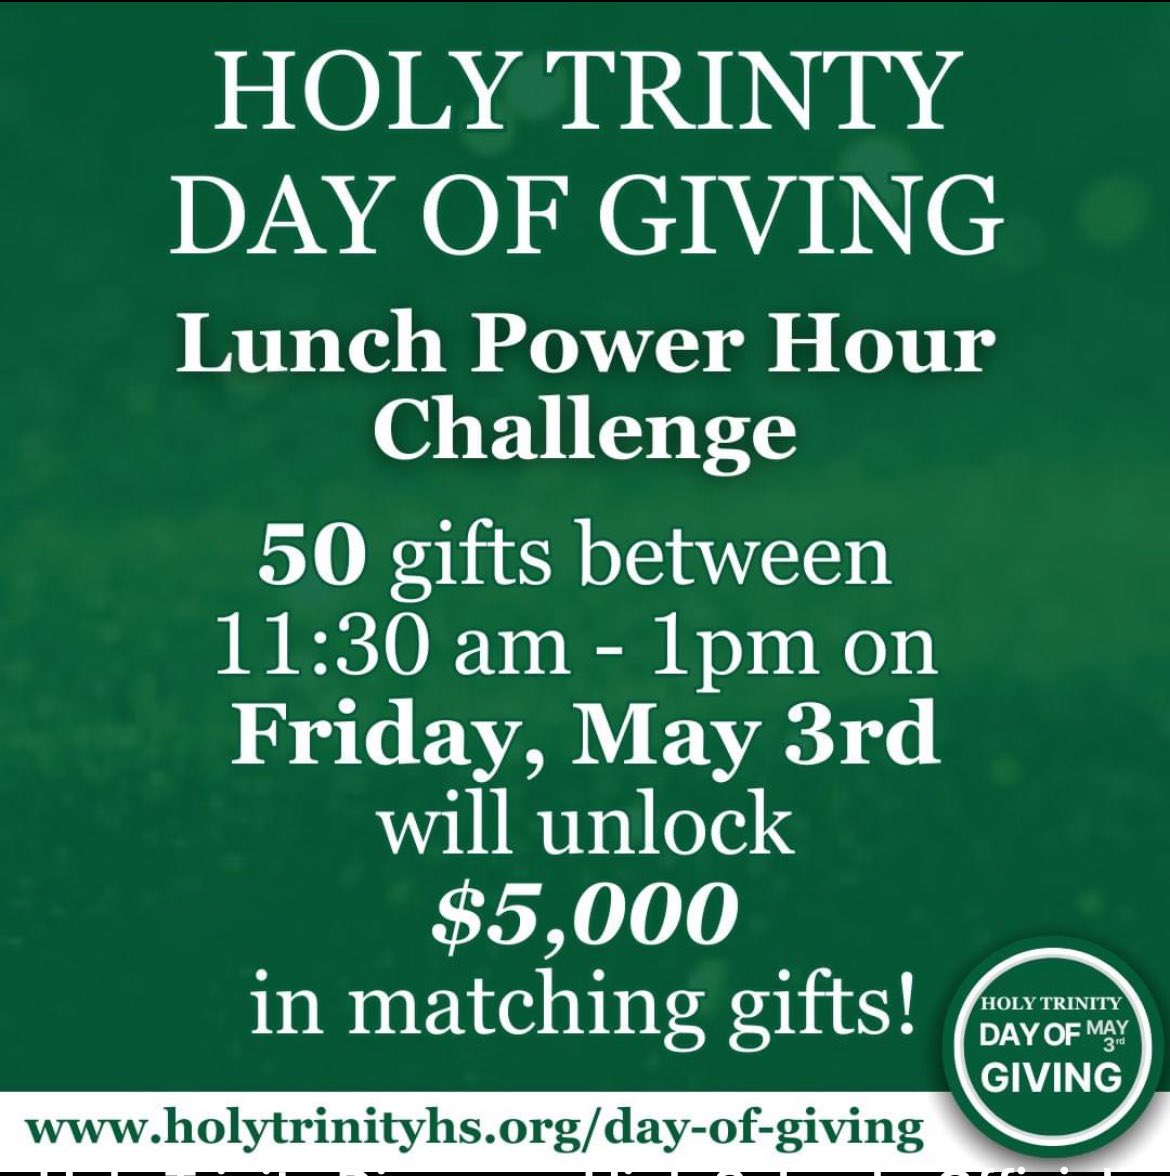 holytrinityhs.org/day-of-giving